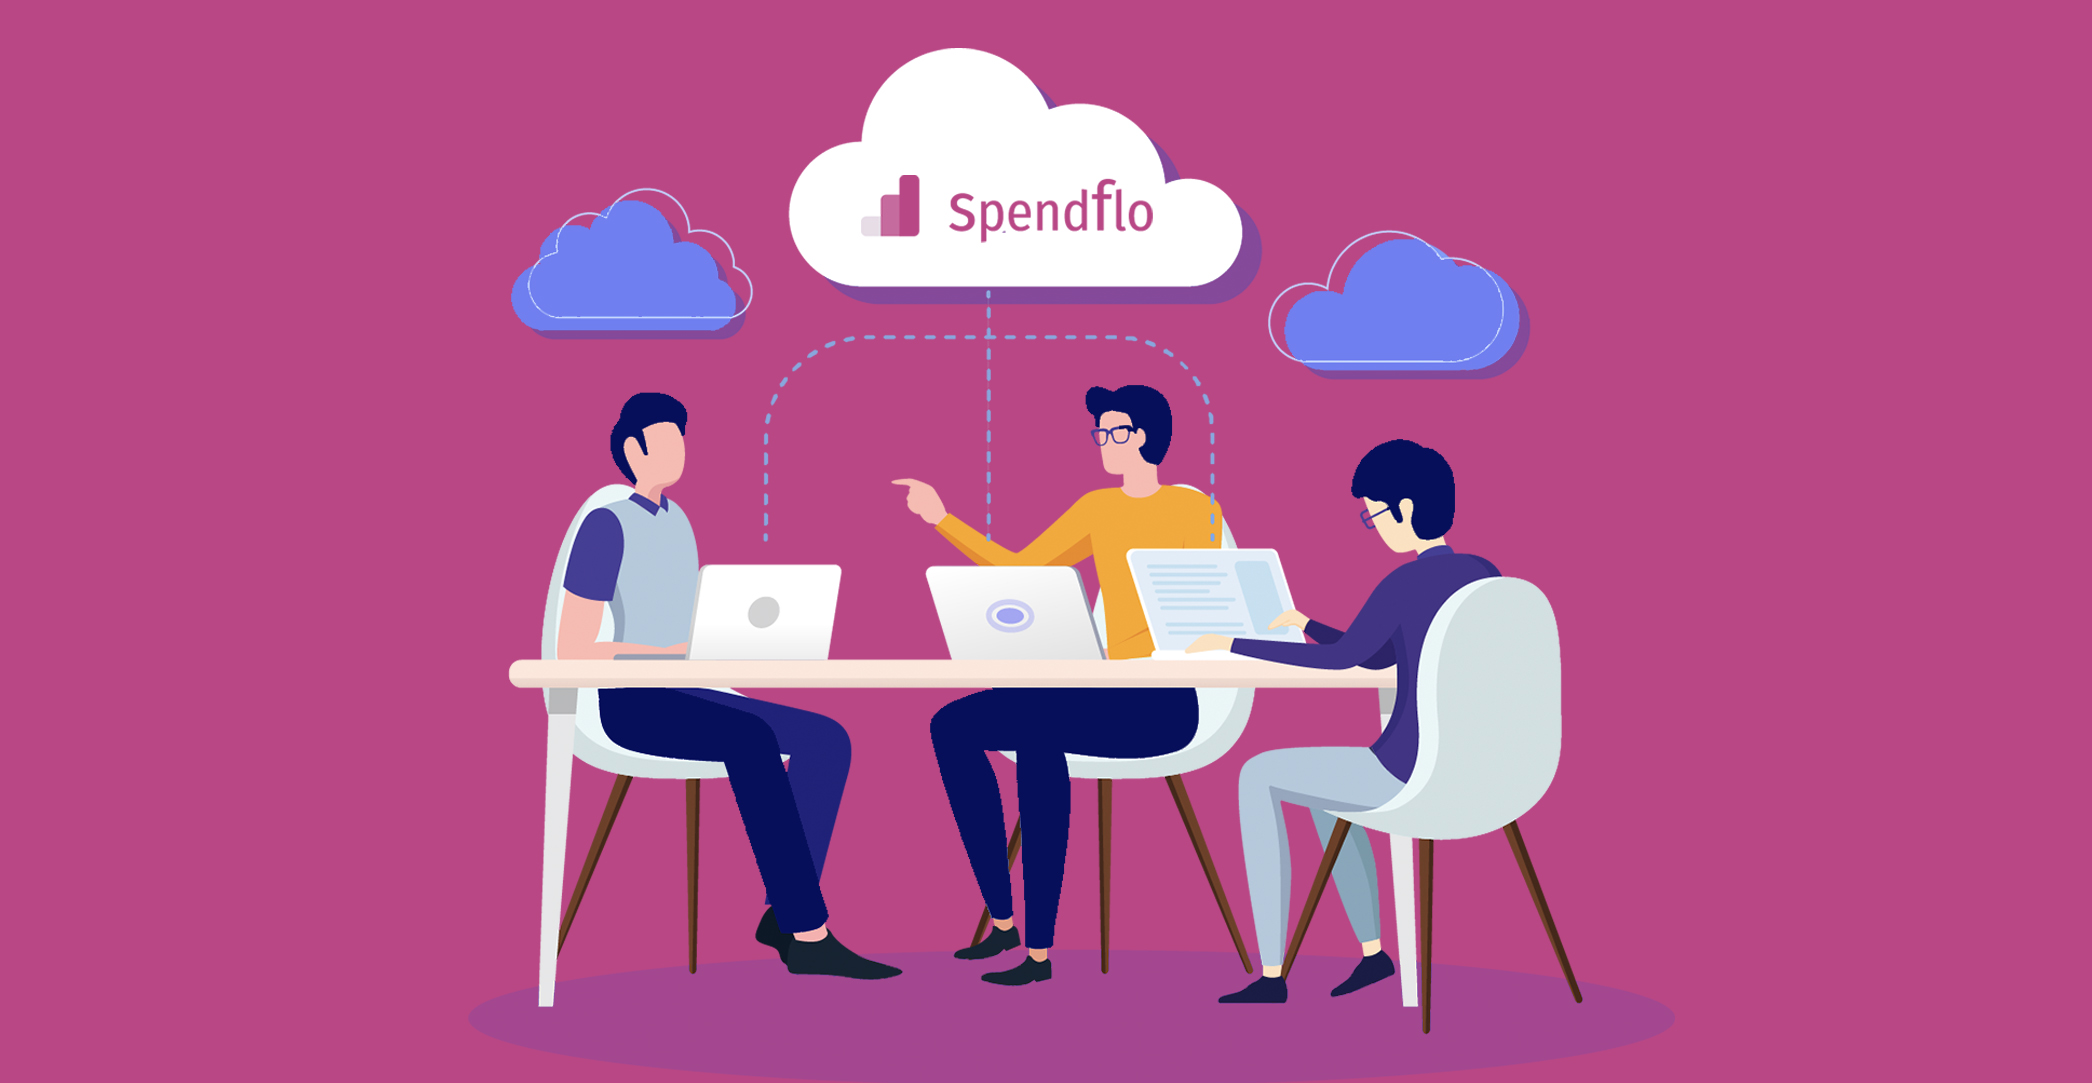 SaaS buying and management solution startup Splendflo raises $11M